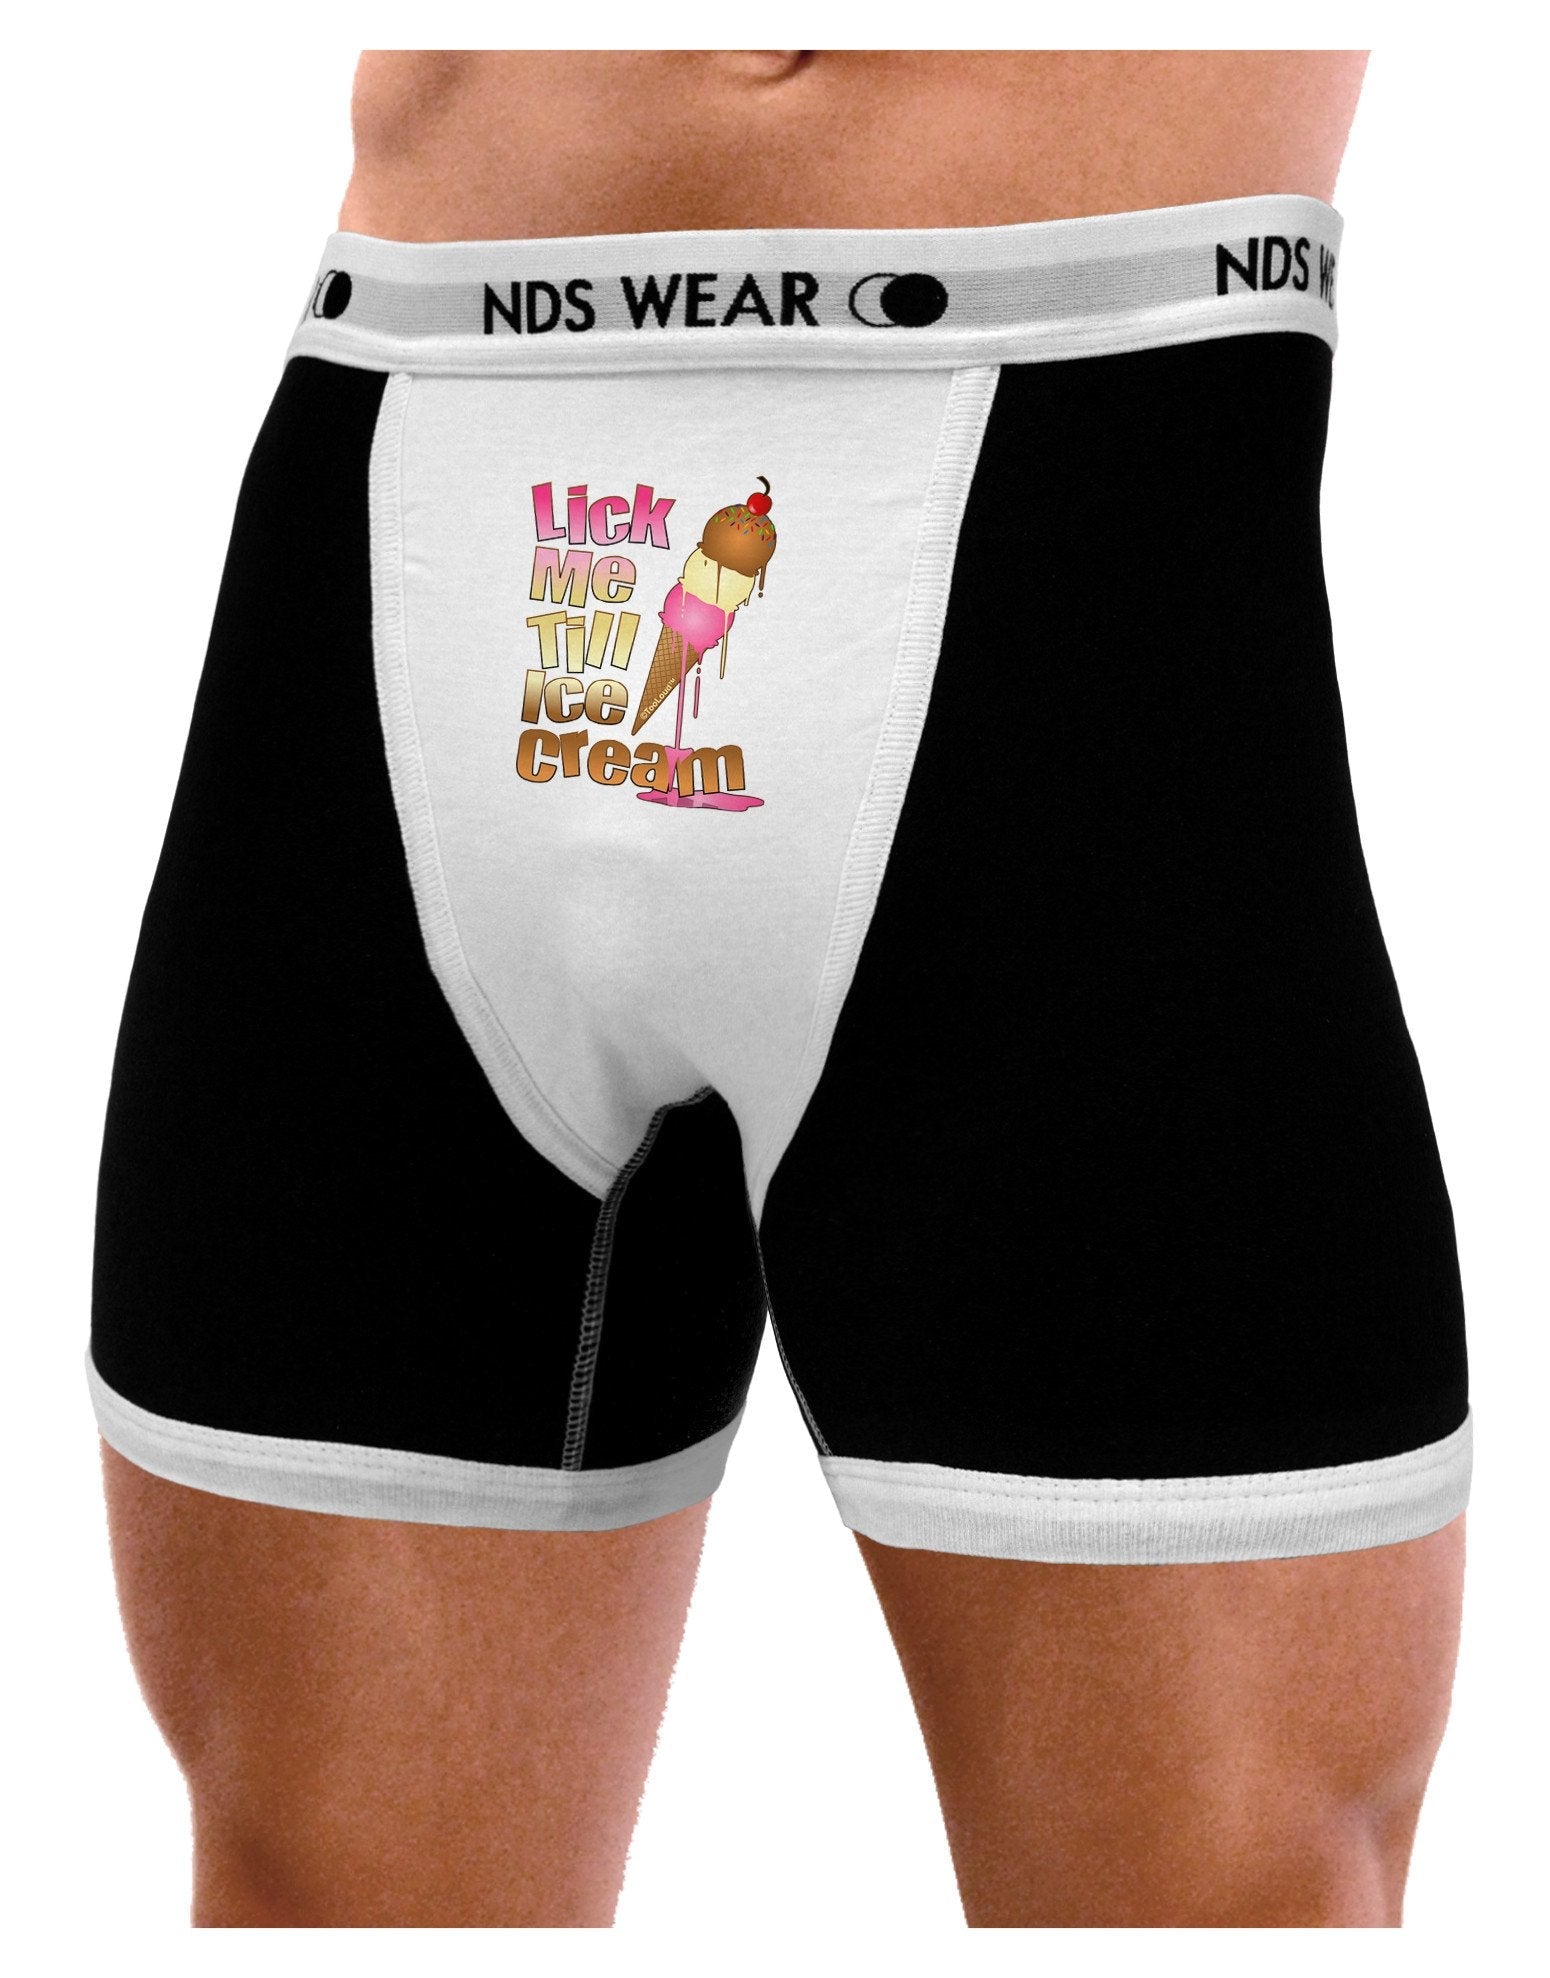 Lick Me Till Ice Cream Mens Boxer Brief Underwear - NDS WEAR